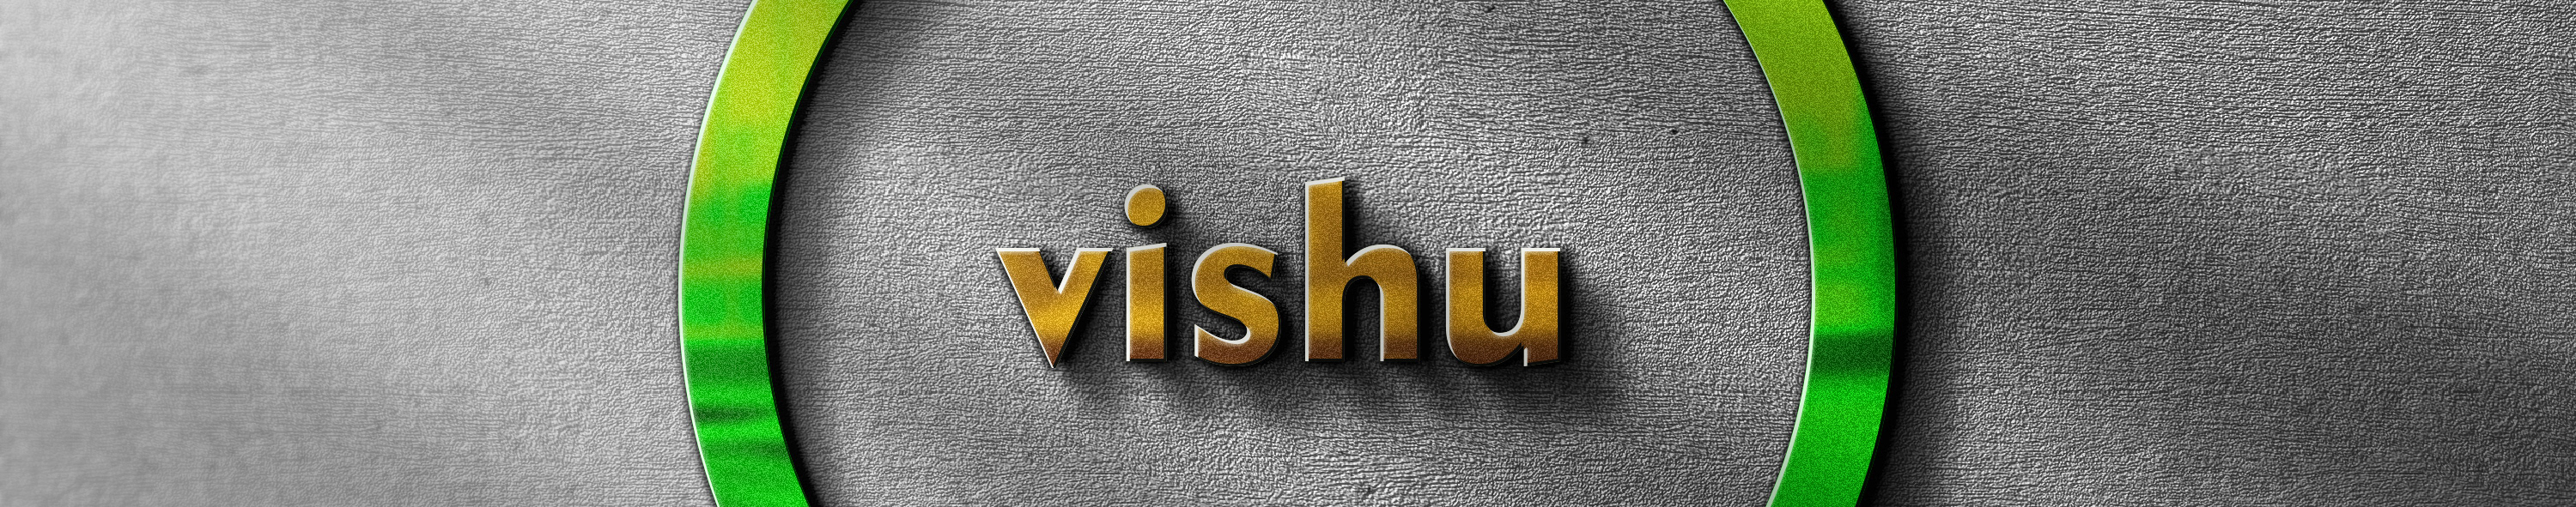 VISHU Yadav's profile banner